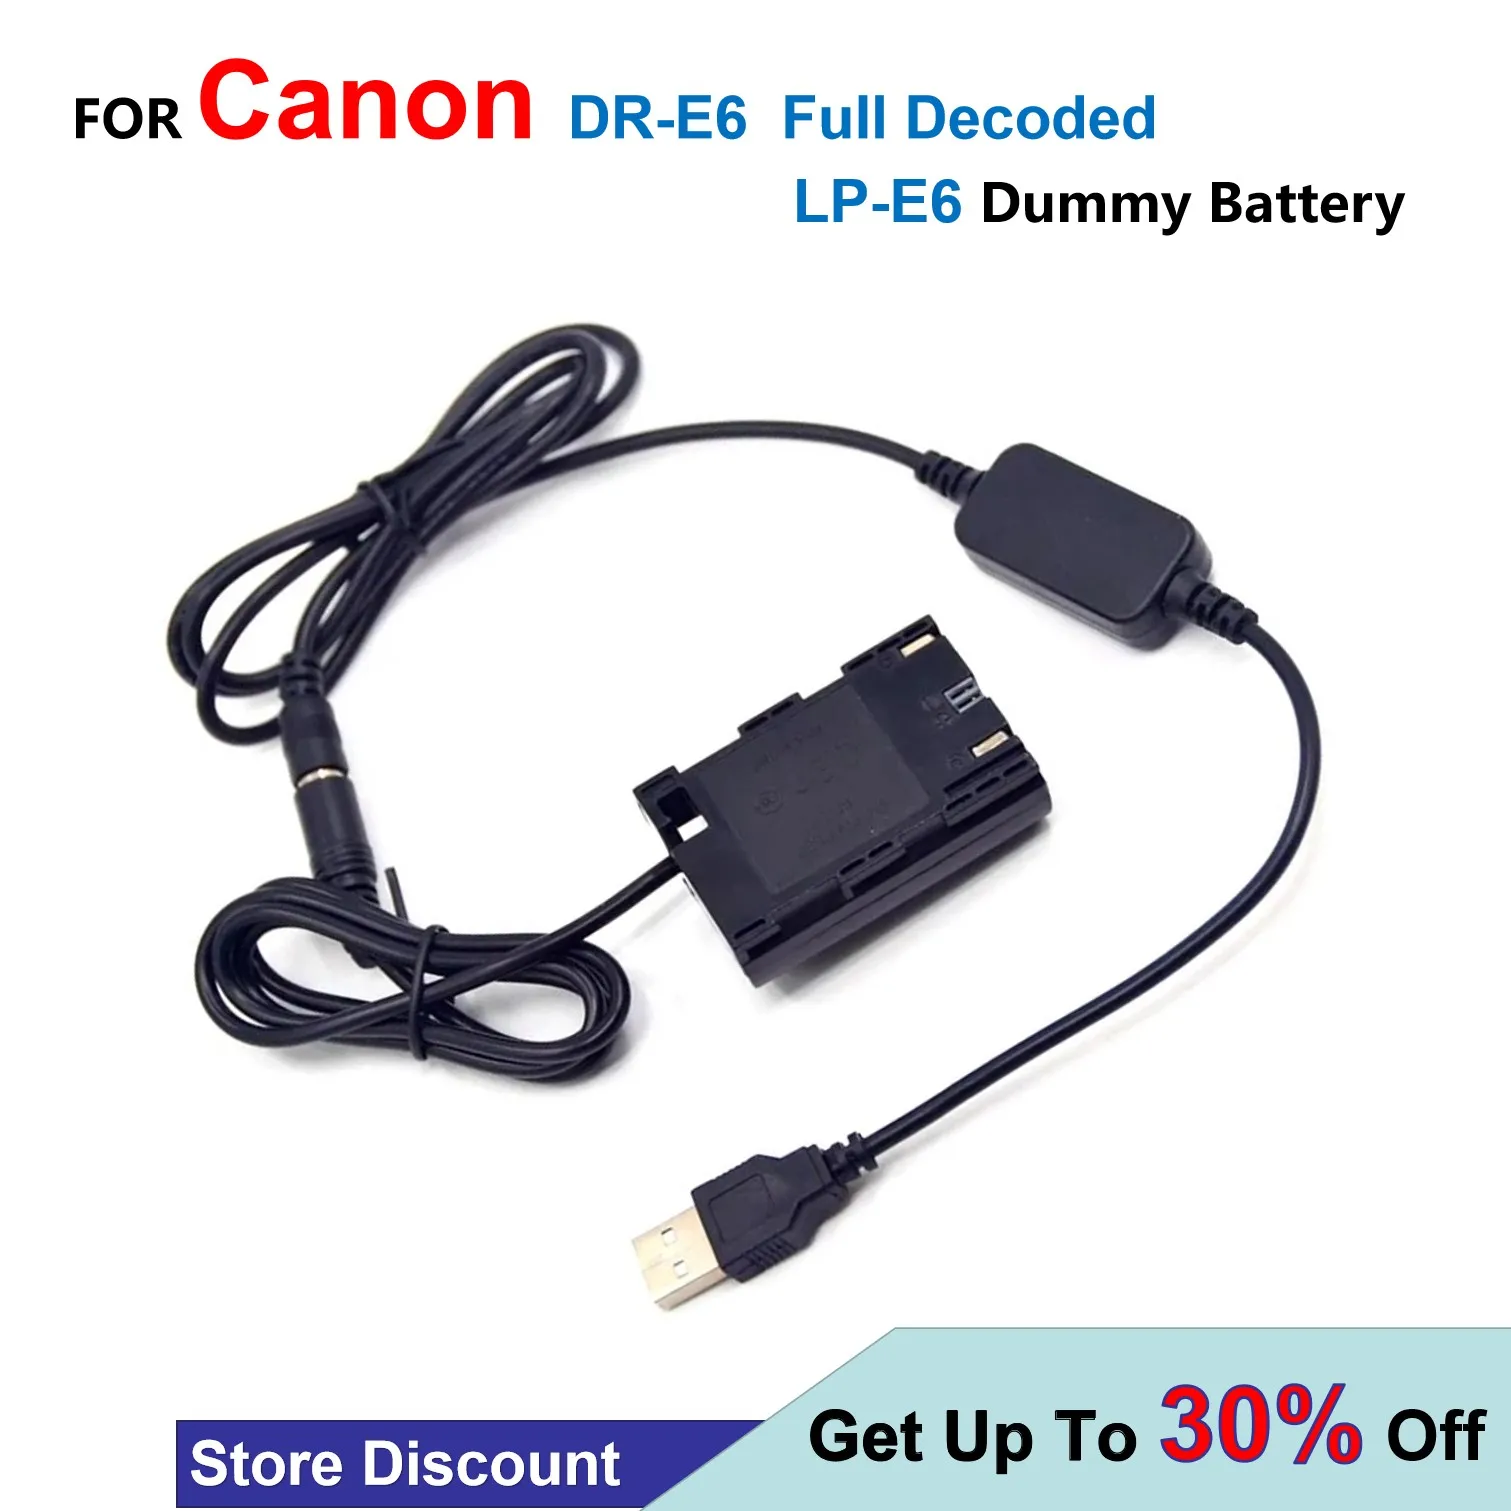 

DR-E6 ACK-E6 AC-E6 Full Decoded LP-E6 Dummy Battery + 5V USB Cable Adapter For Canon EOS 5D Mark II III 5D2 5D3 6D 7D 60D SLR